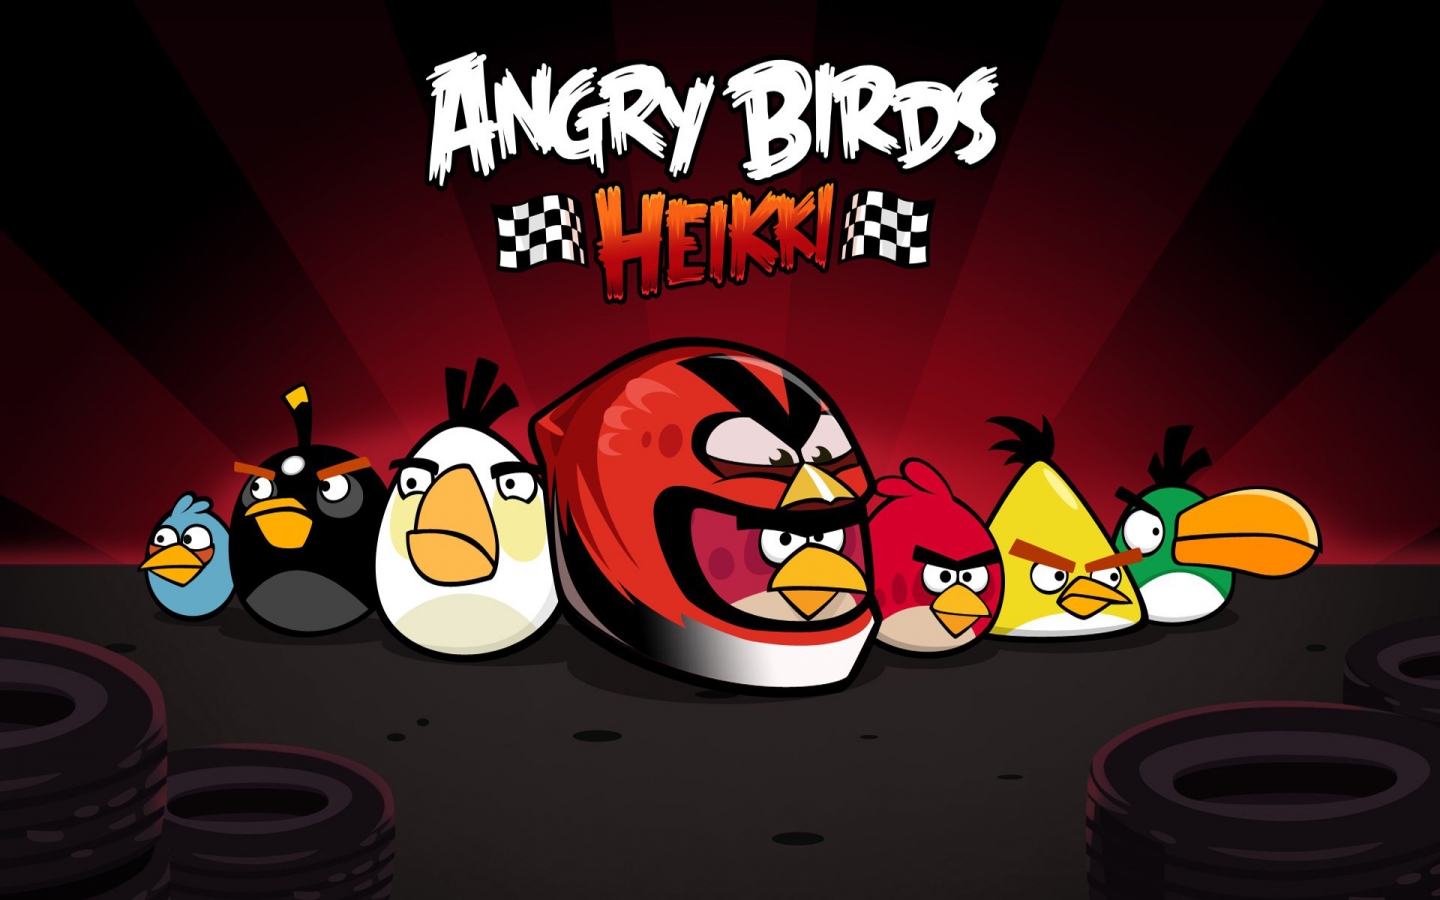 Angry Birds Heikki for 1440 x 900 widescreen resolution